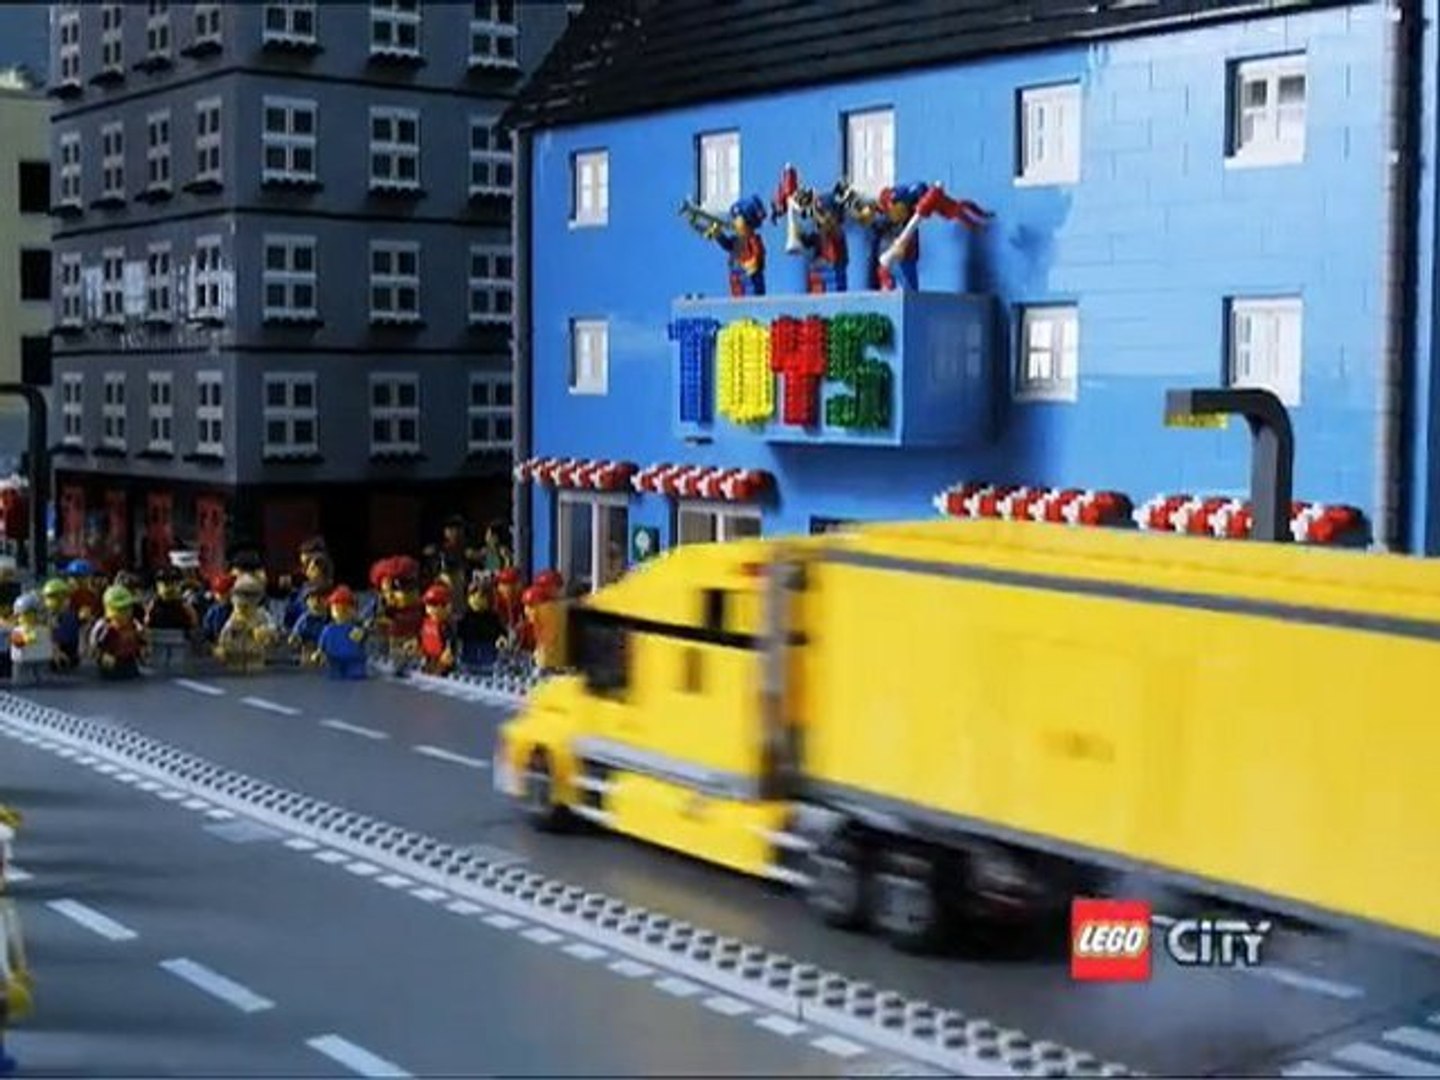 LEGO City - Spot Camion Jaune (15 sec) 2010 - Vidéo Dailymotion